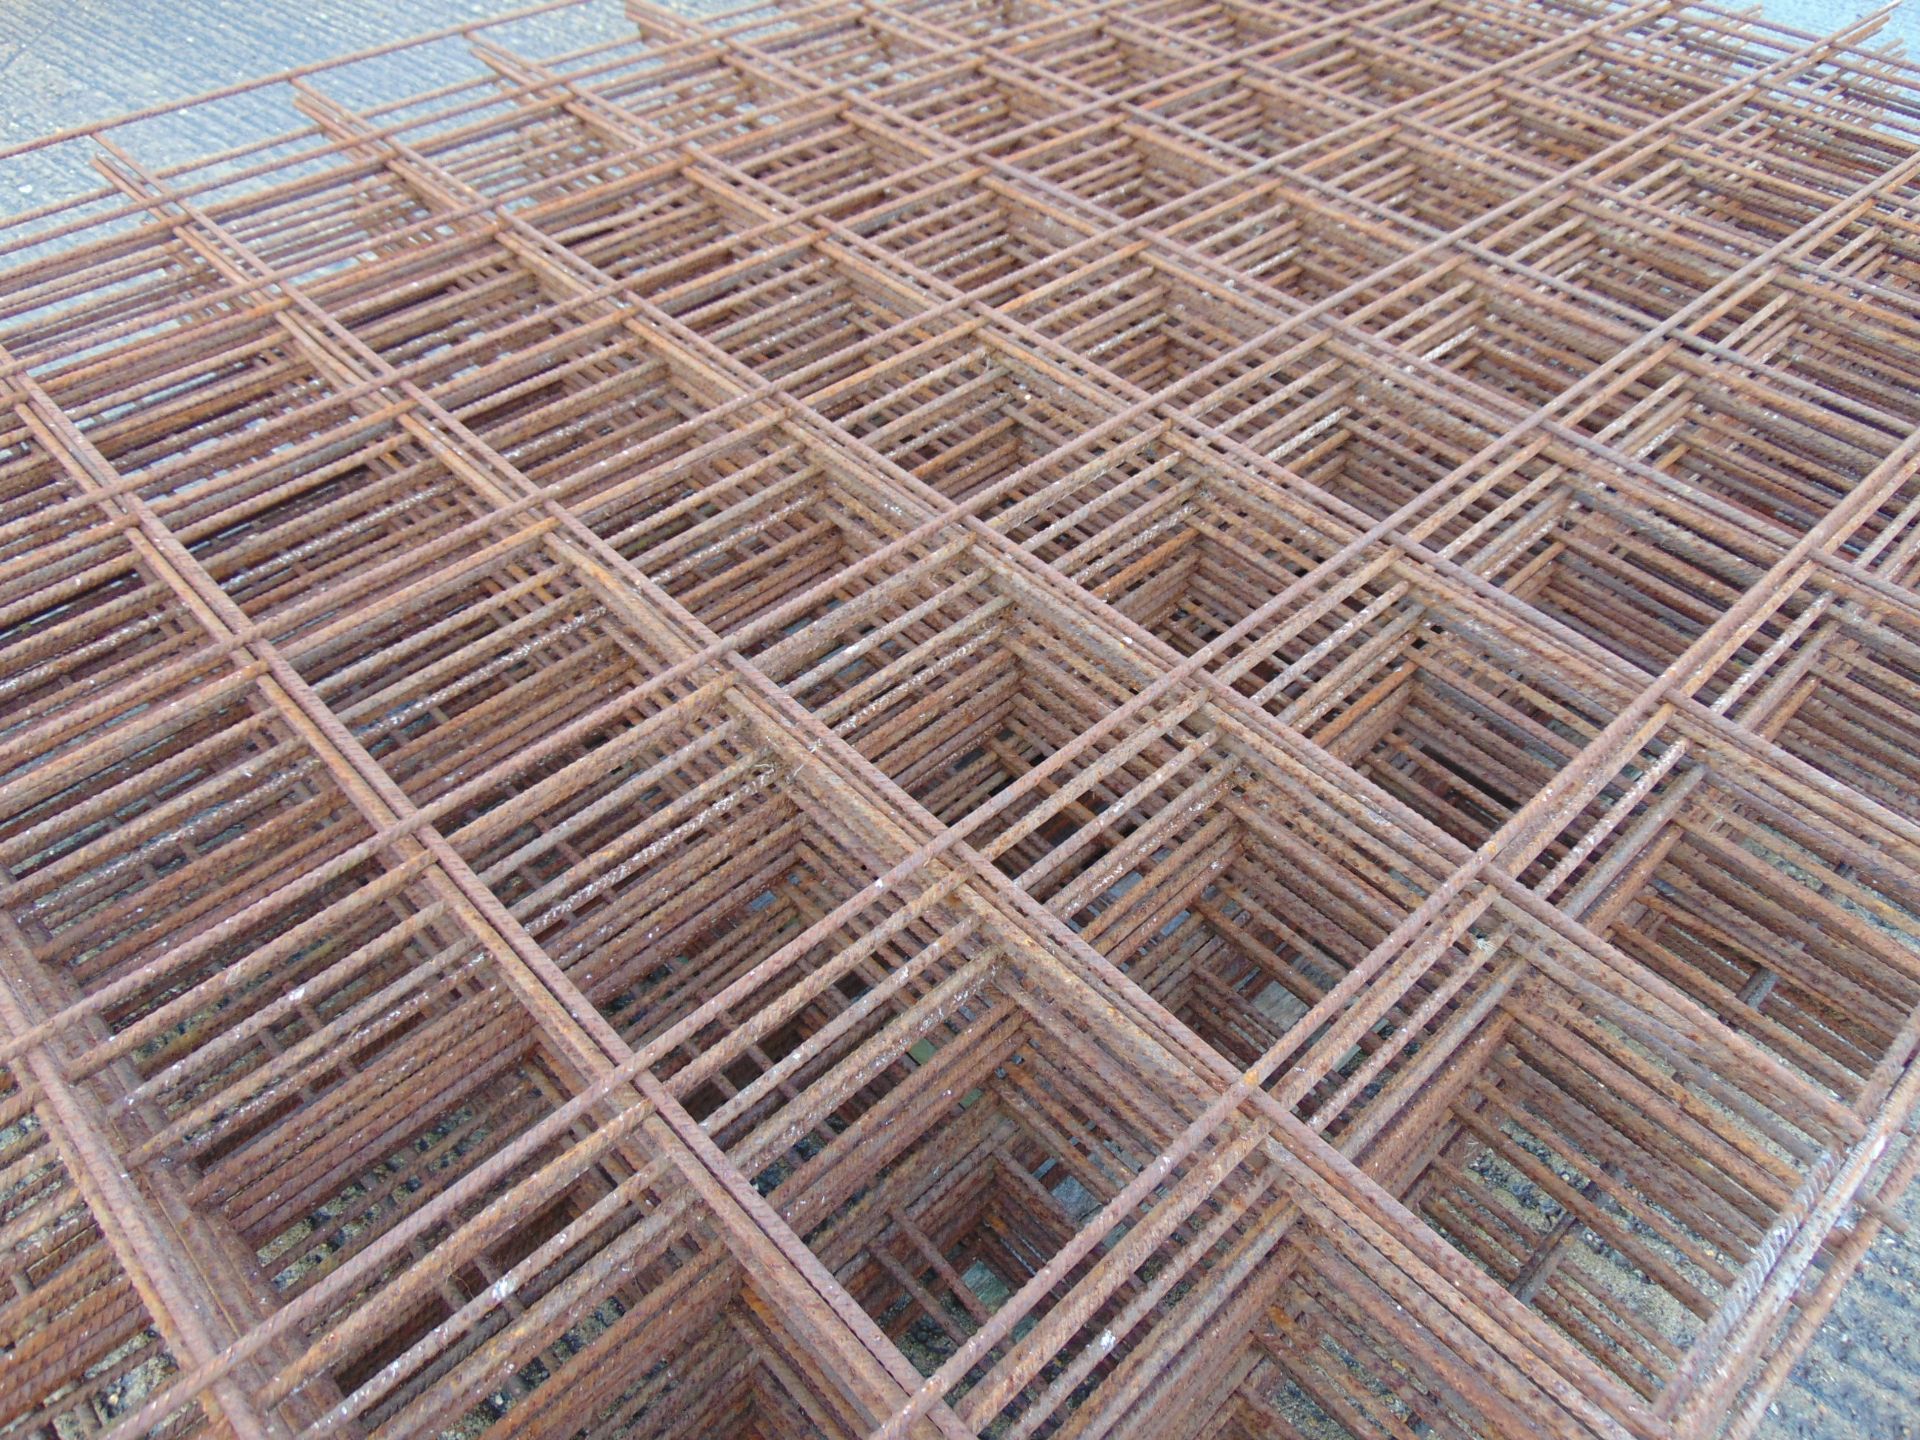 30 x Concrete Reinforcement Steel Mesh 2.4m x 1.6m 8mm Wires - Image 2 of 4